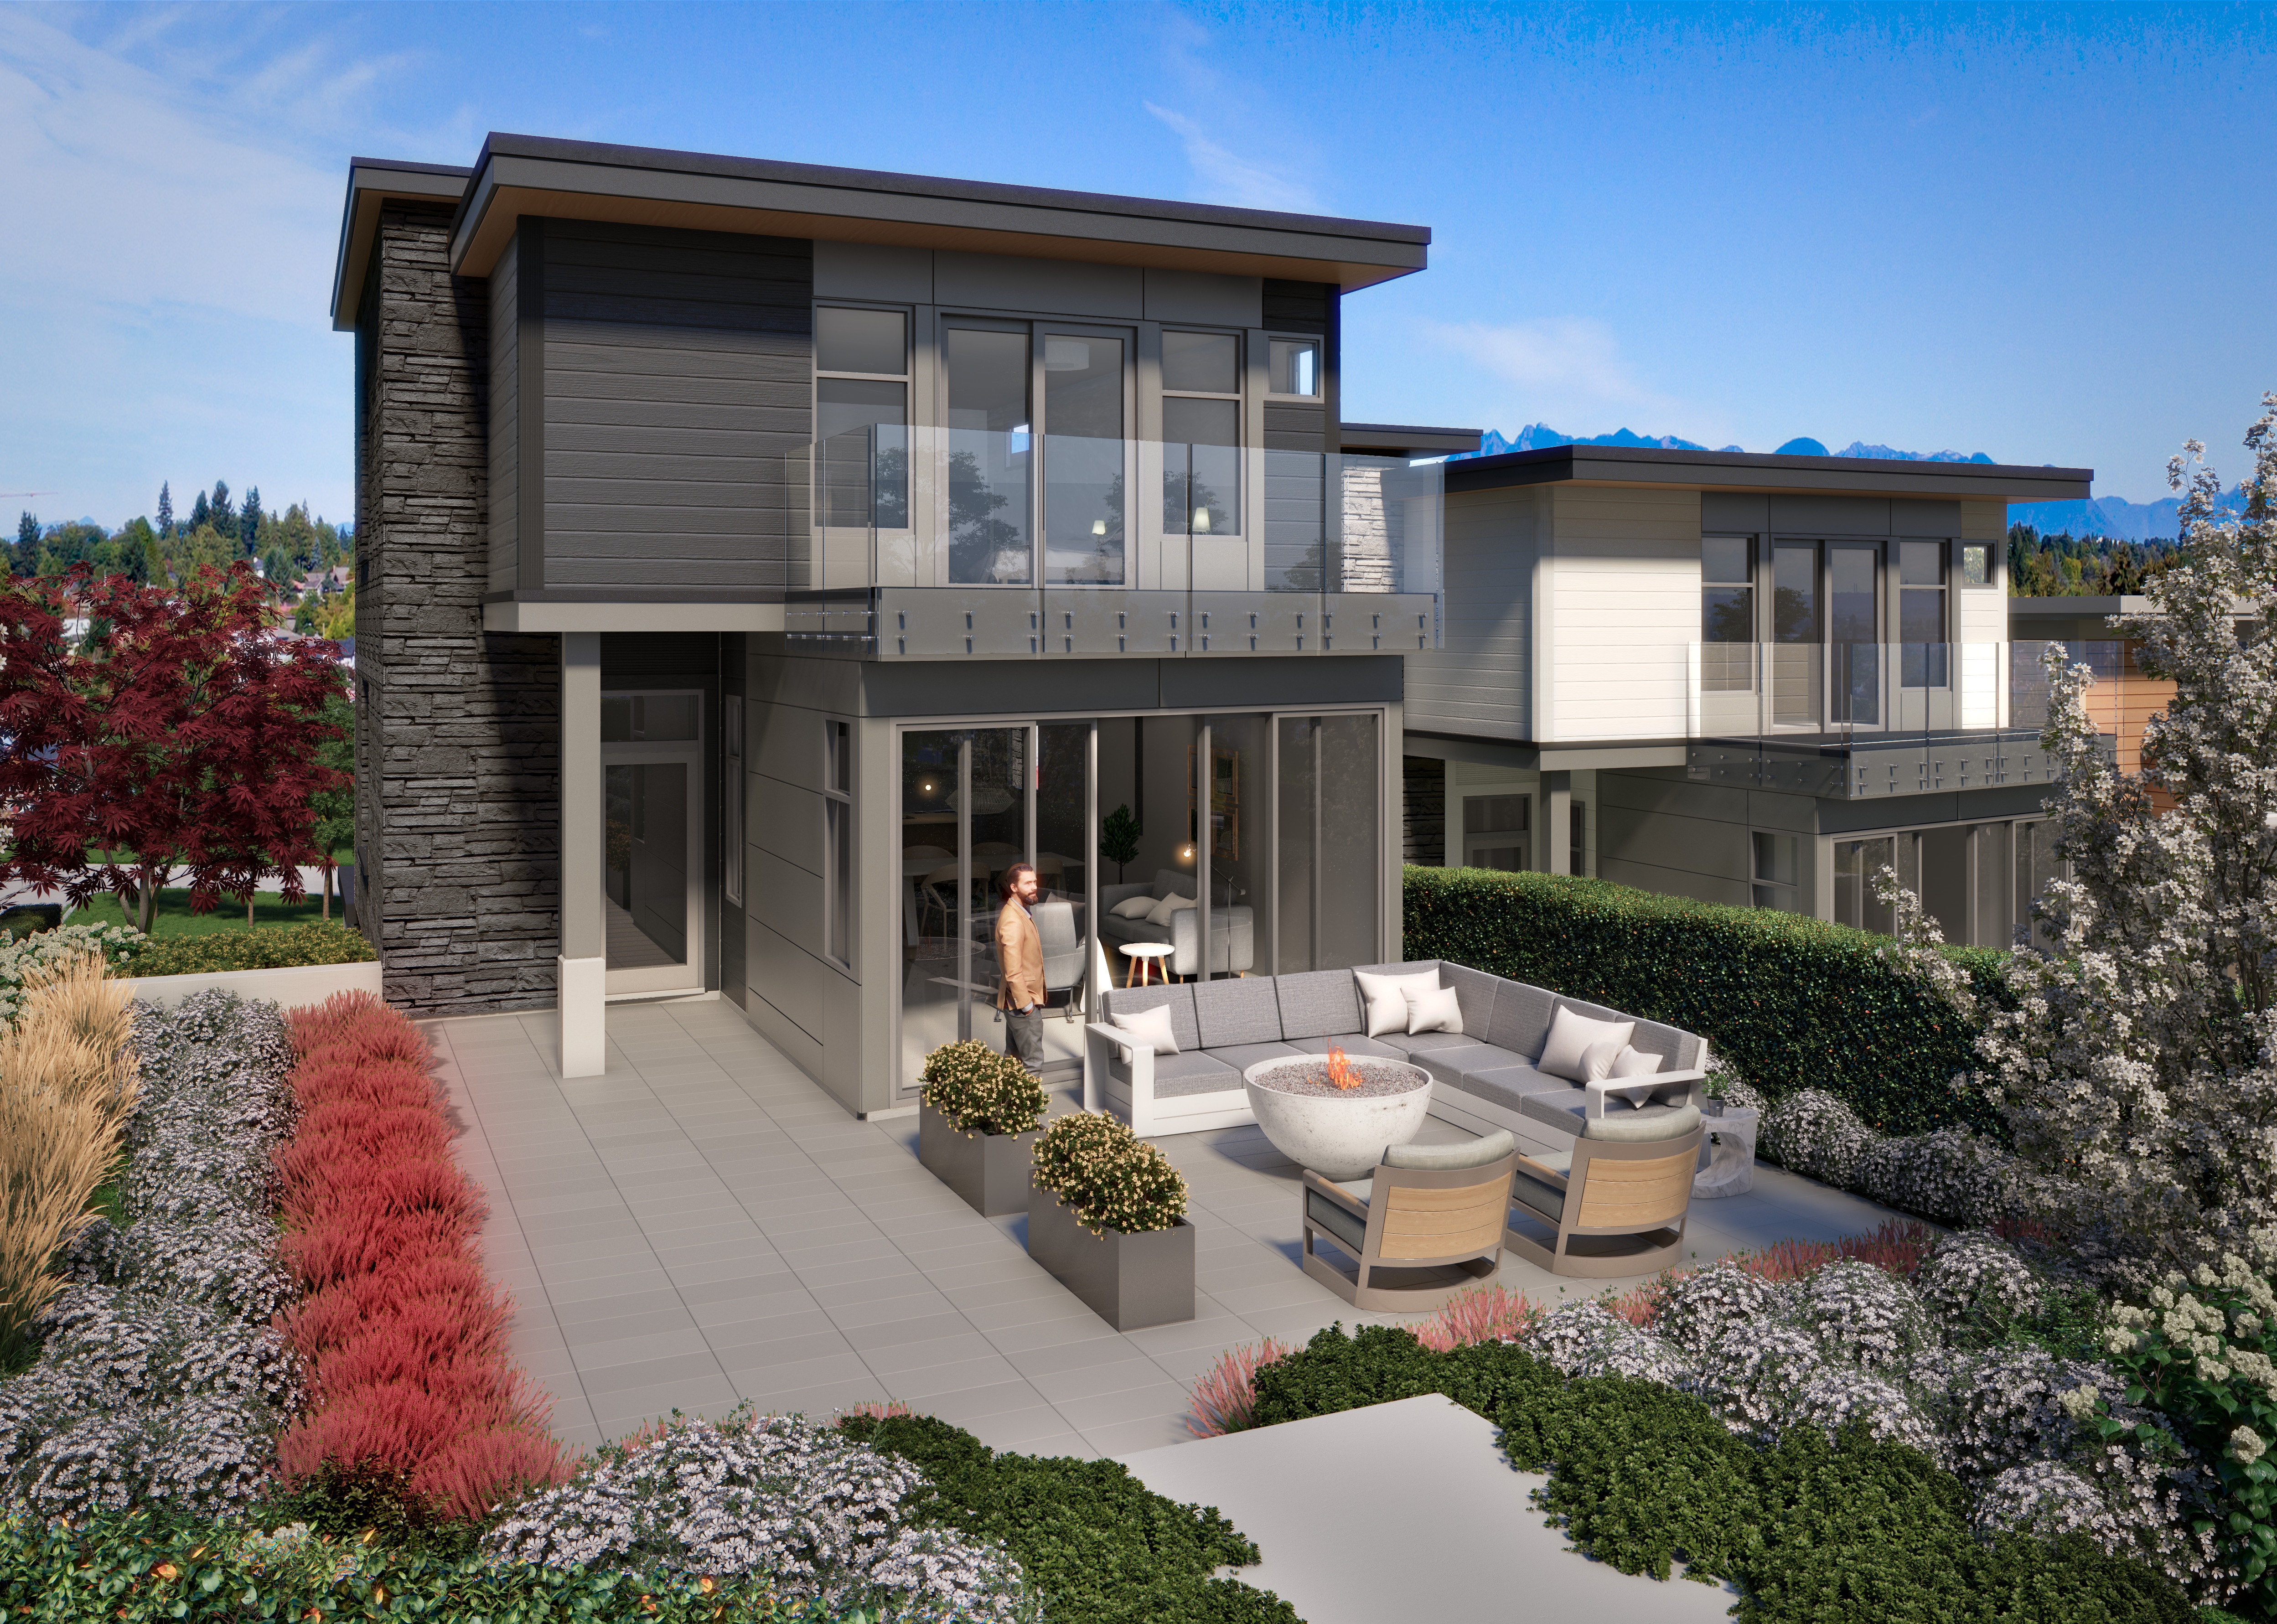 West Vancouver Townhome Development | Kreel Creative Design Consultants